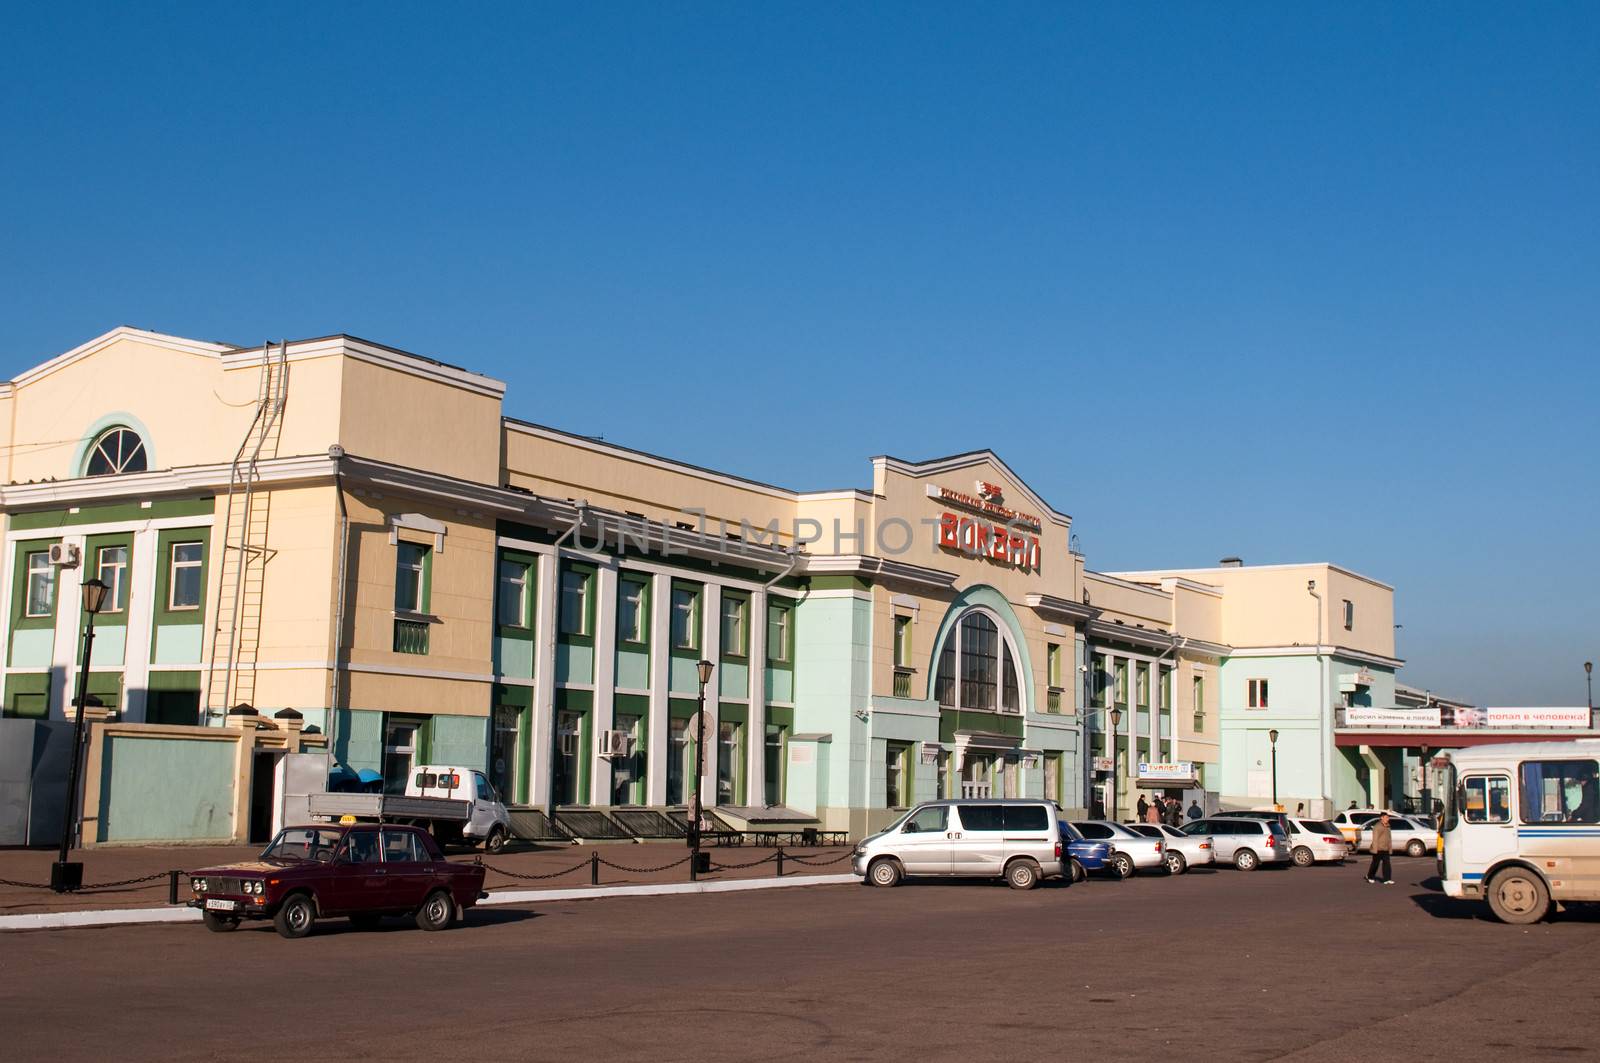 Central railway station. Ulan-Ude, capital city of the Buryat Republic, Russia